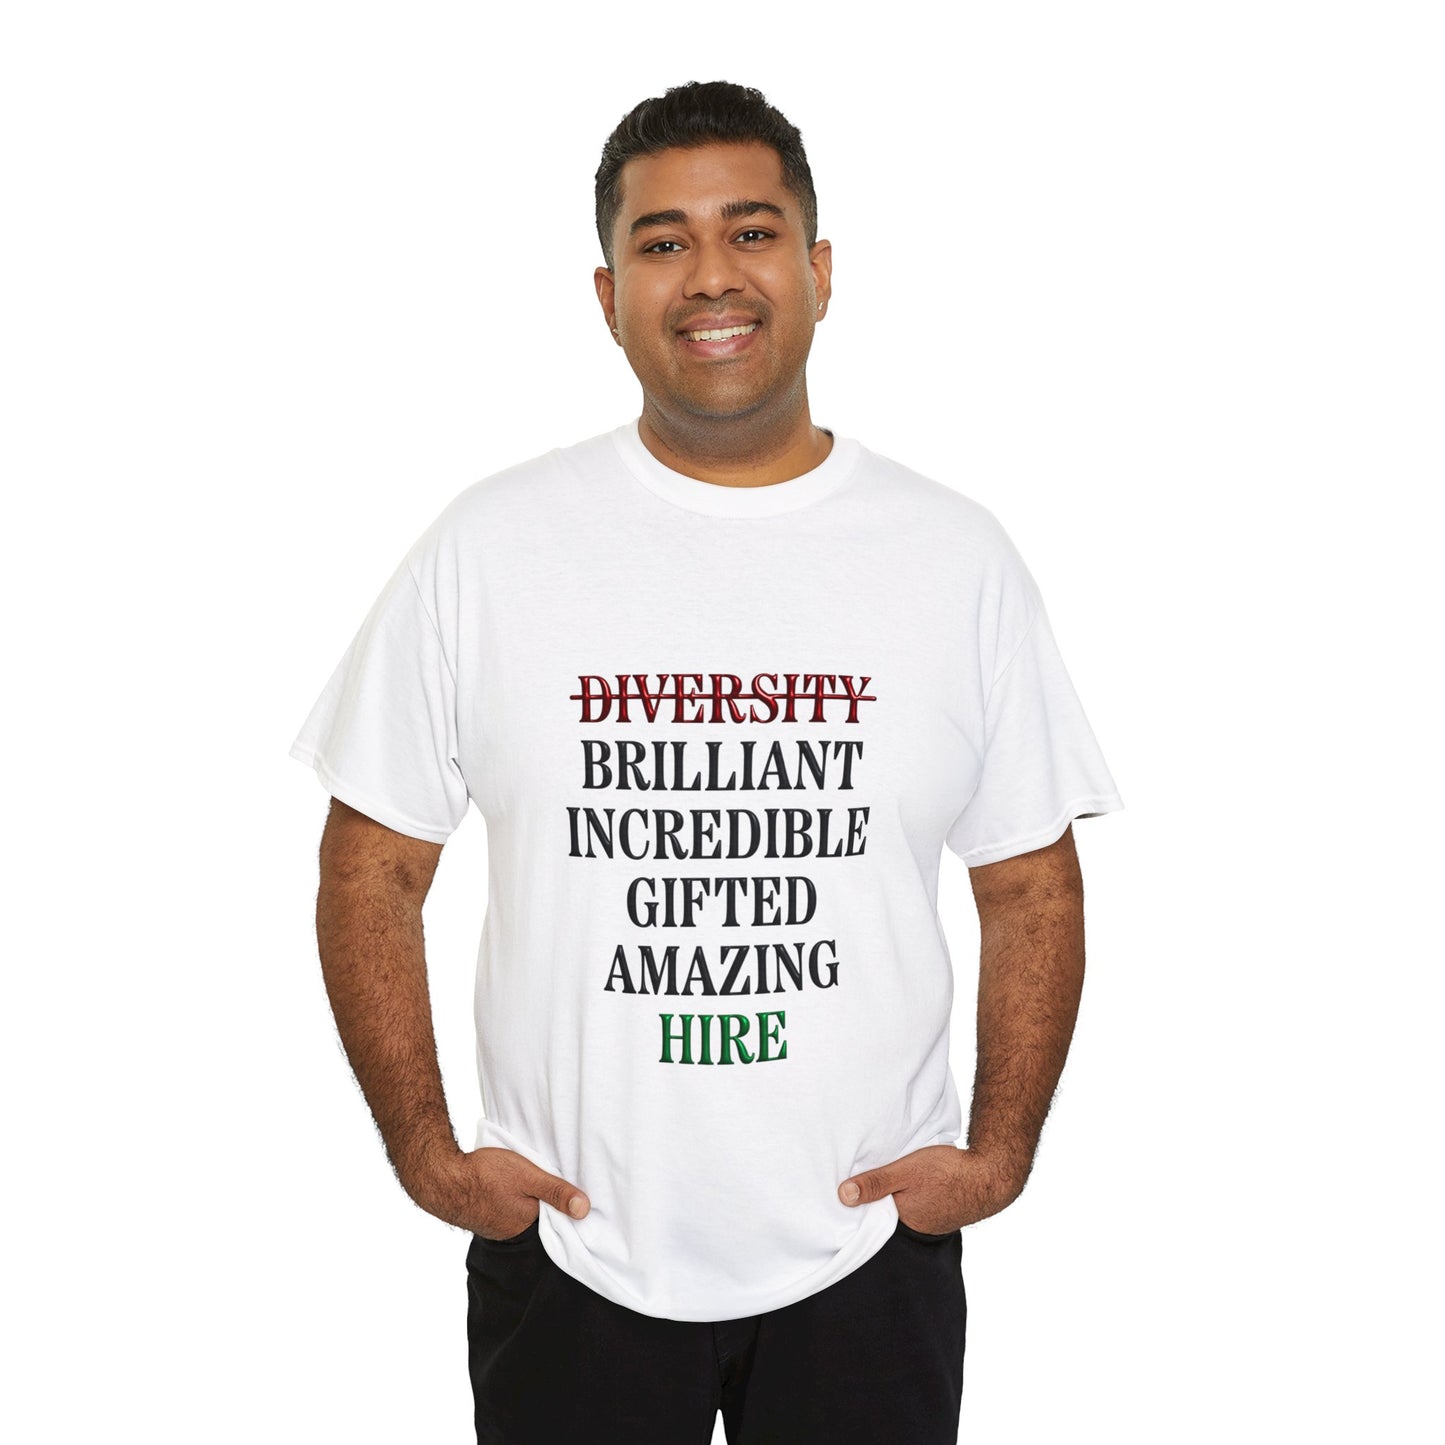 More Than a Diversity Hire